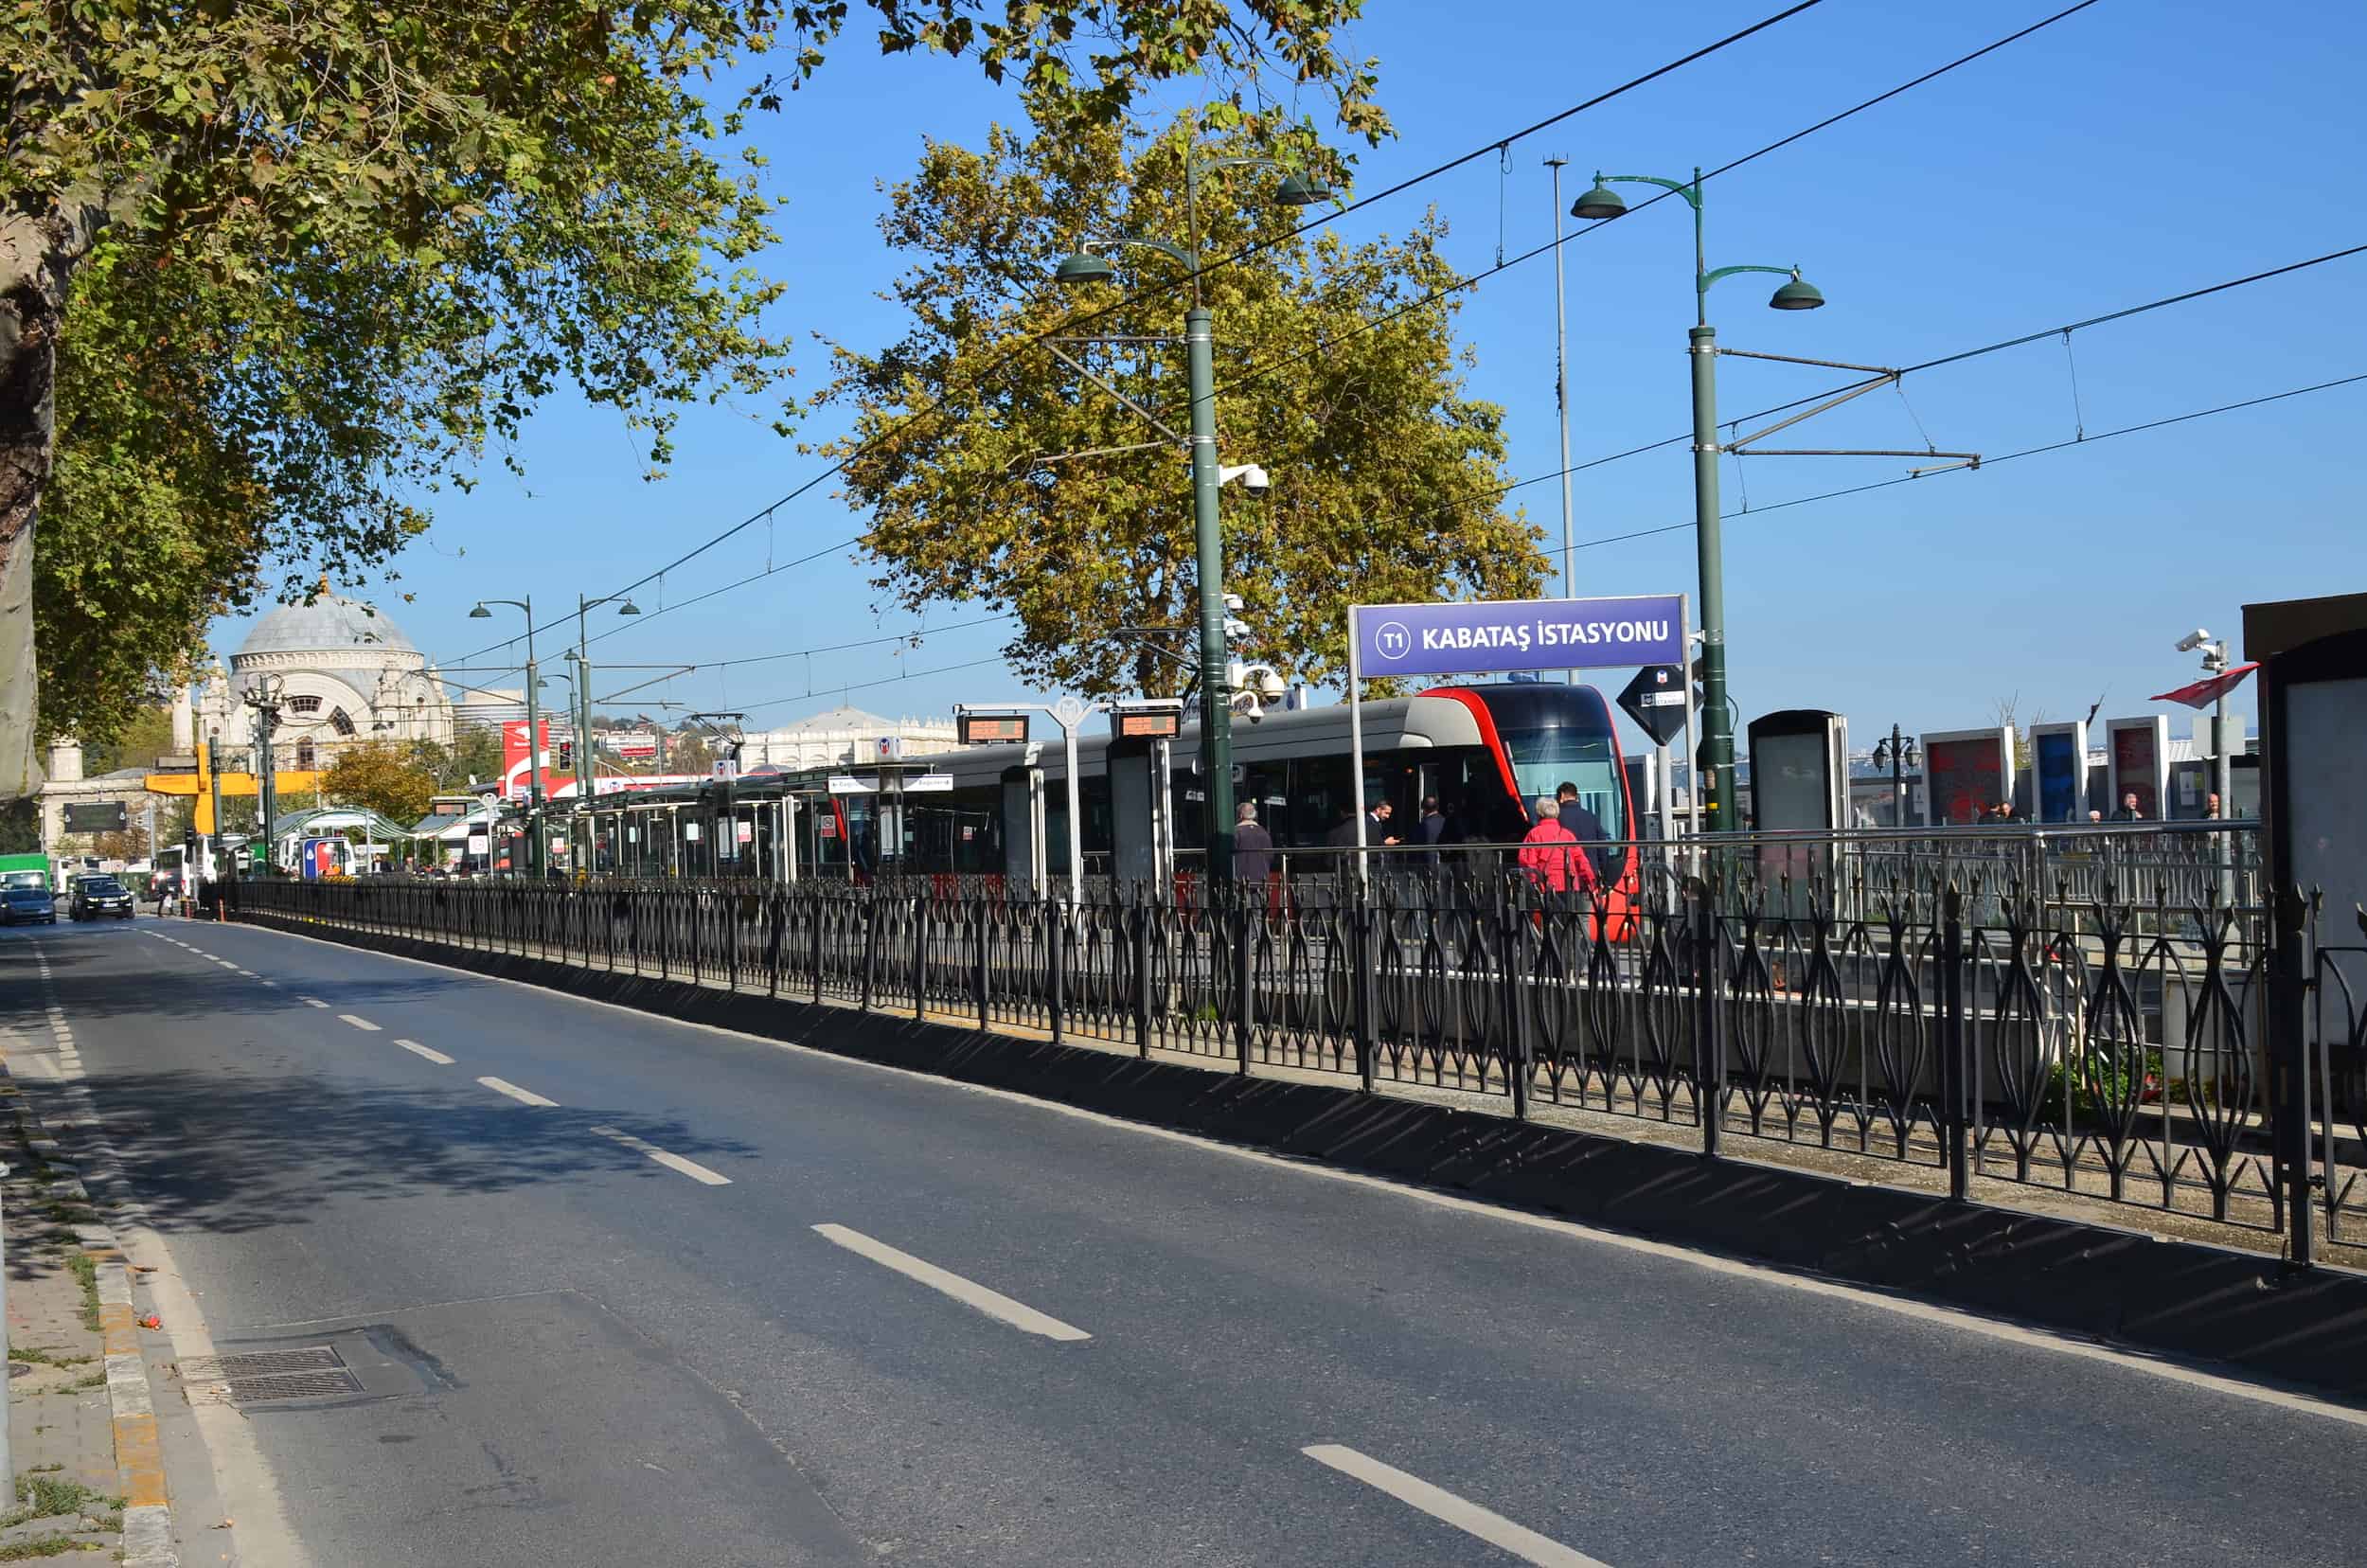 T1 tram line in Kabataş, Istanbul, Turkey